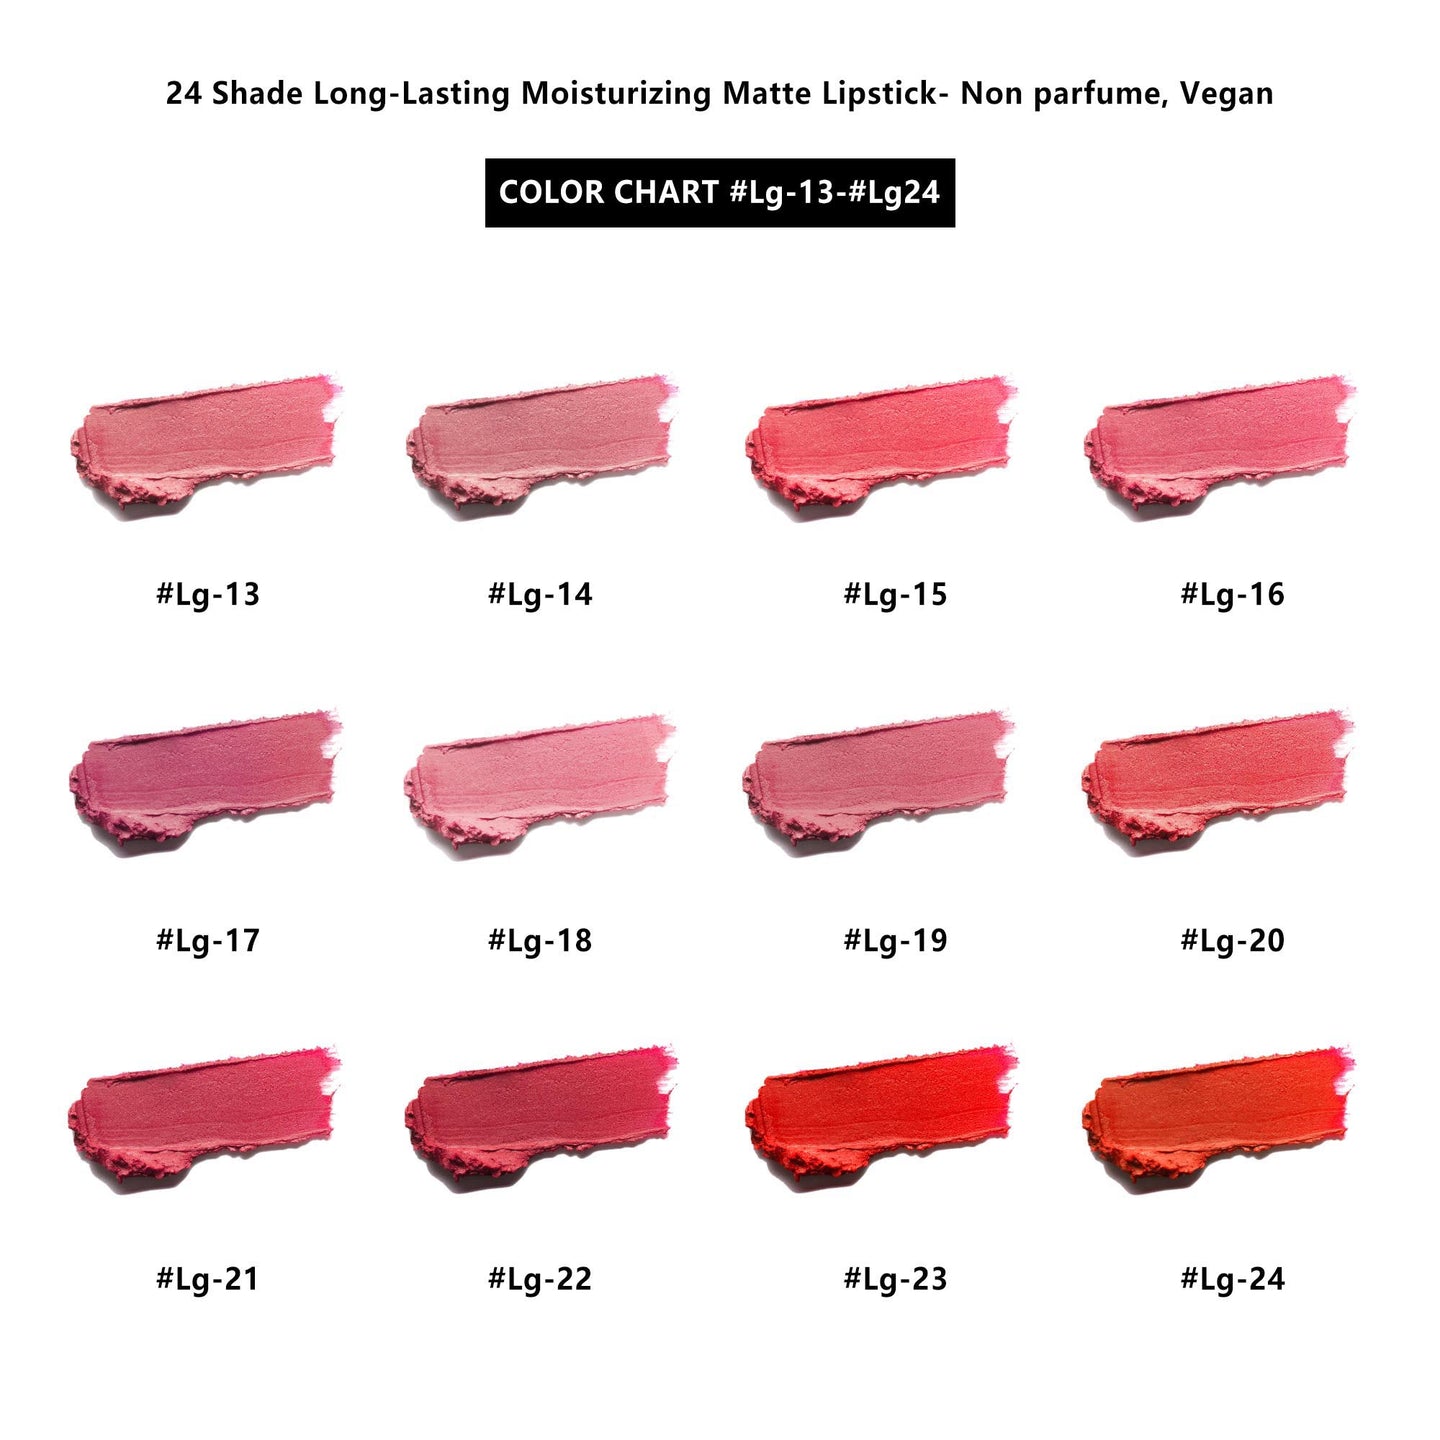 24 Shade Long-Lasting Super Matte Lipstick - Non parfume, Vegan